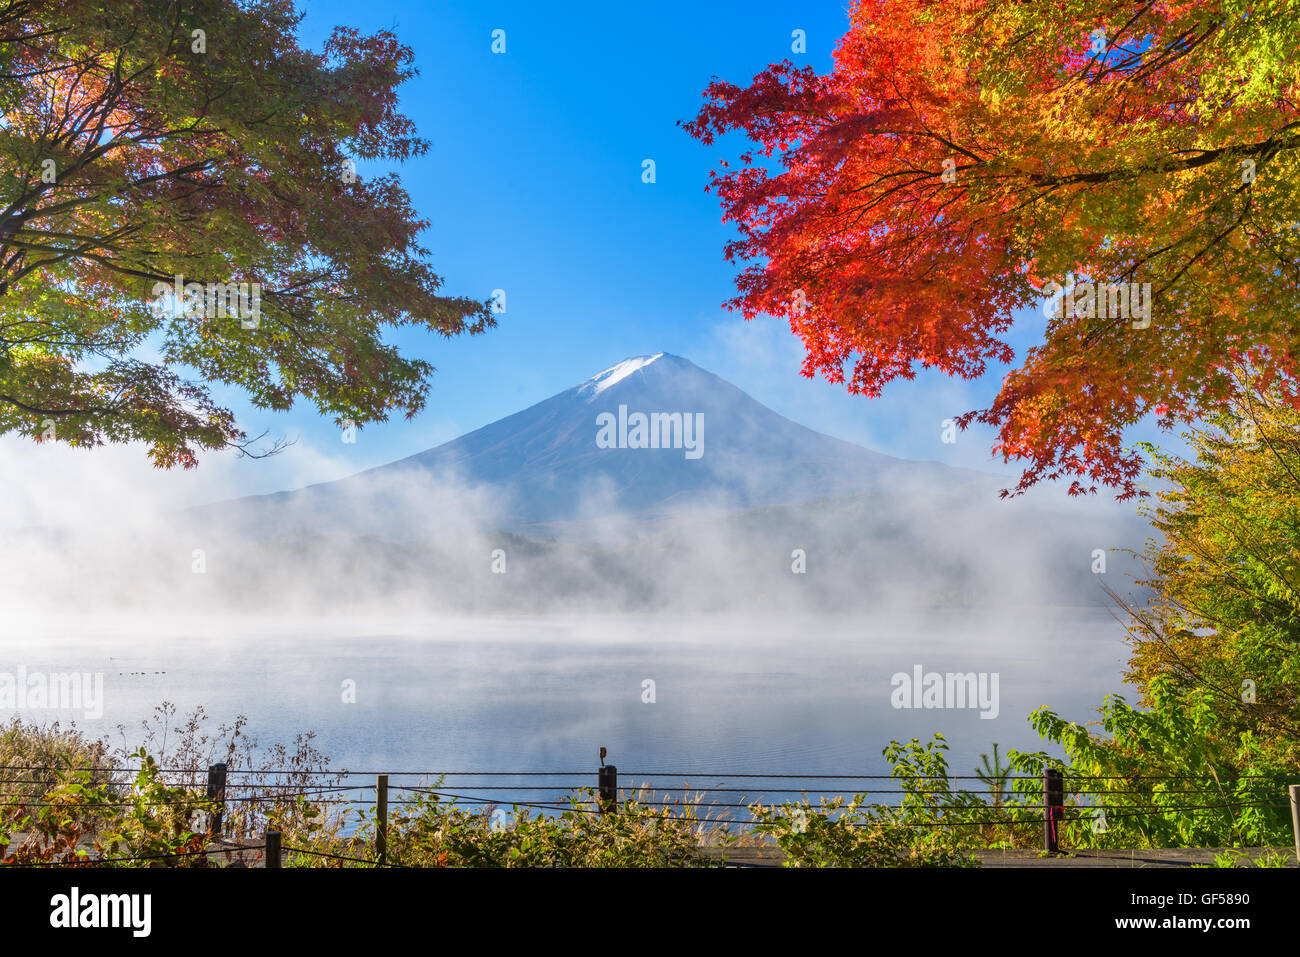 Mt. Fuji, Japan from Kawaguchi Lake in the autumn season. Stock Photo